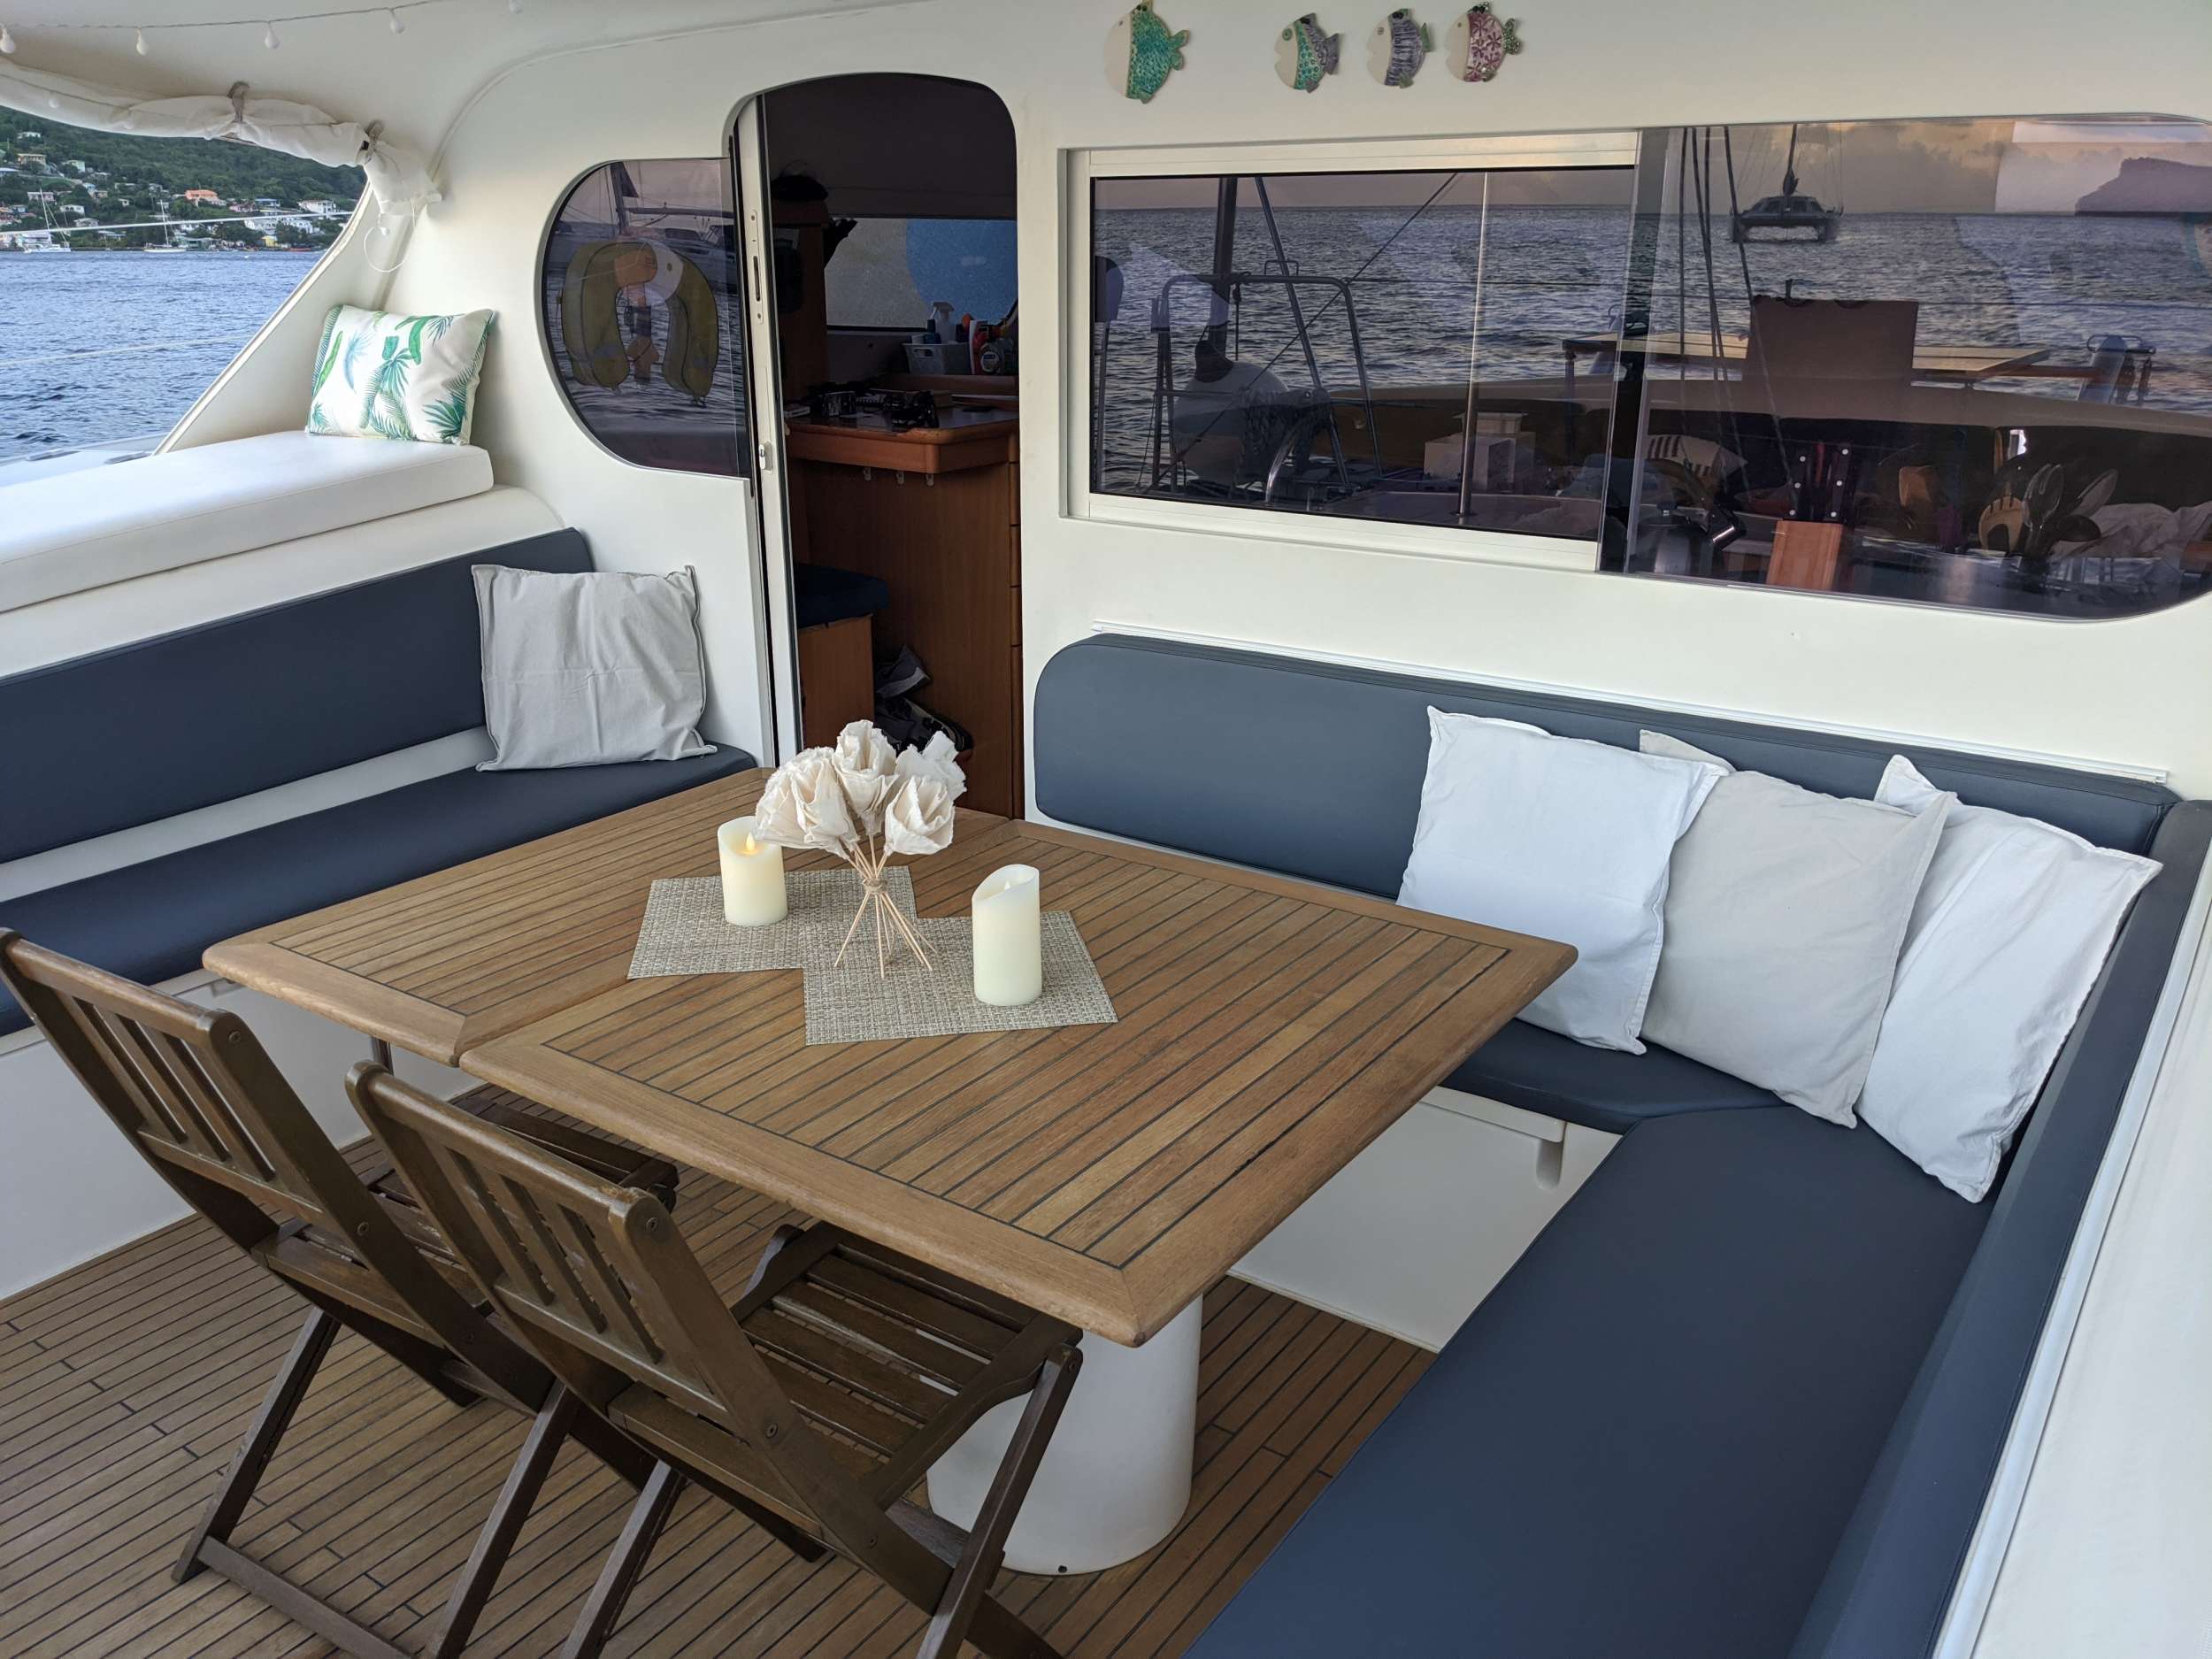 NEMO Yacht Charter - New Cushions